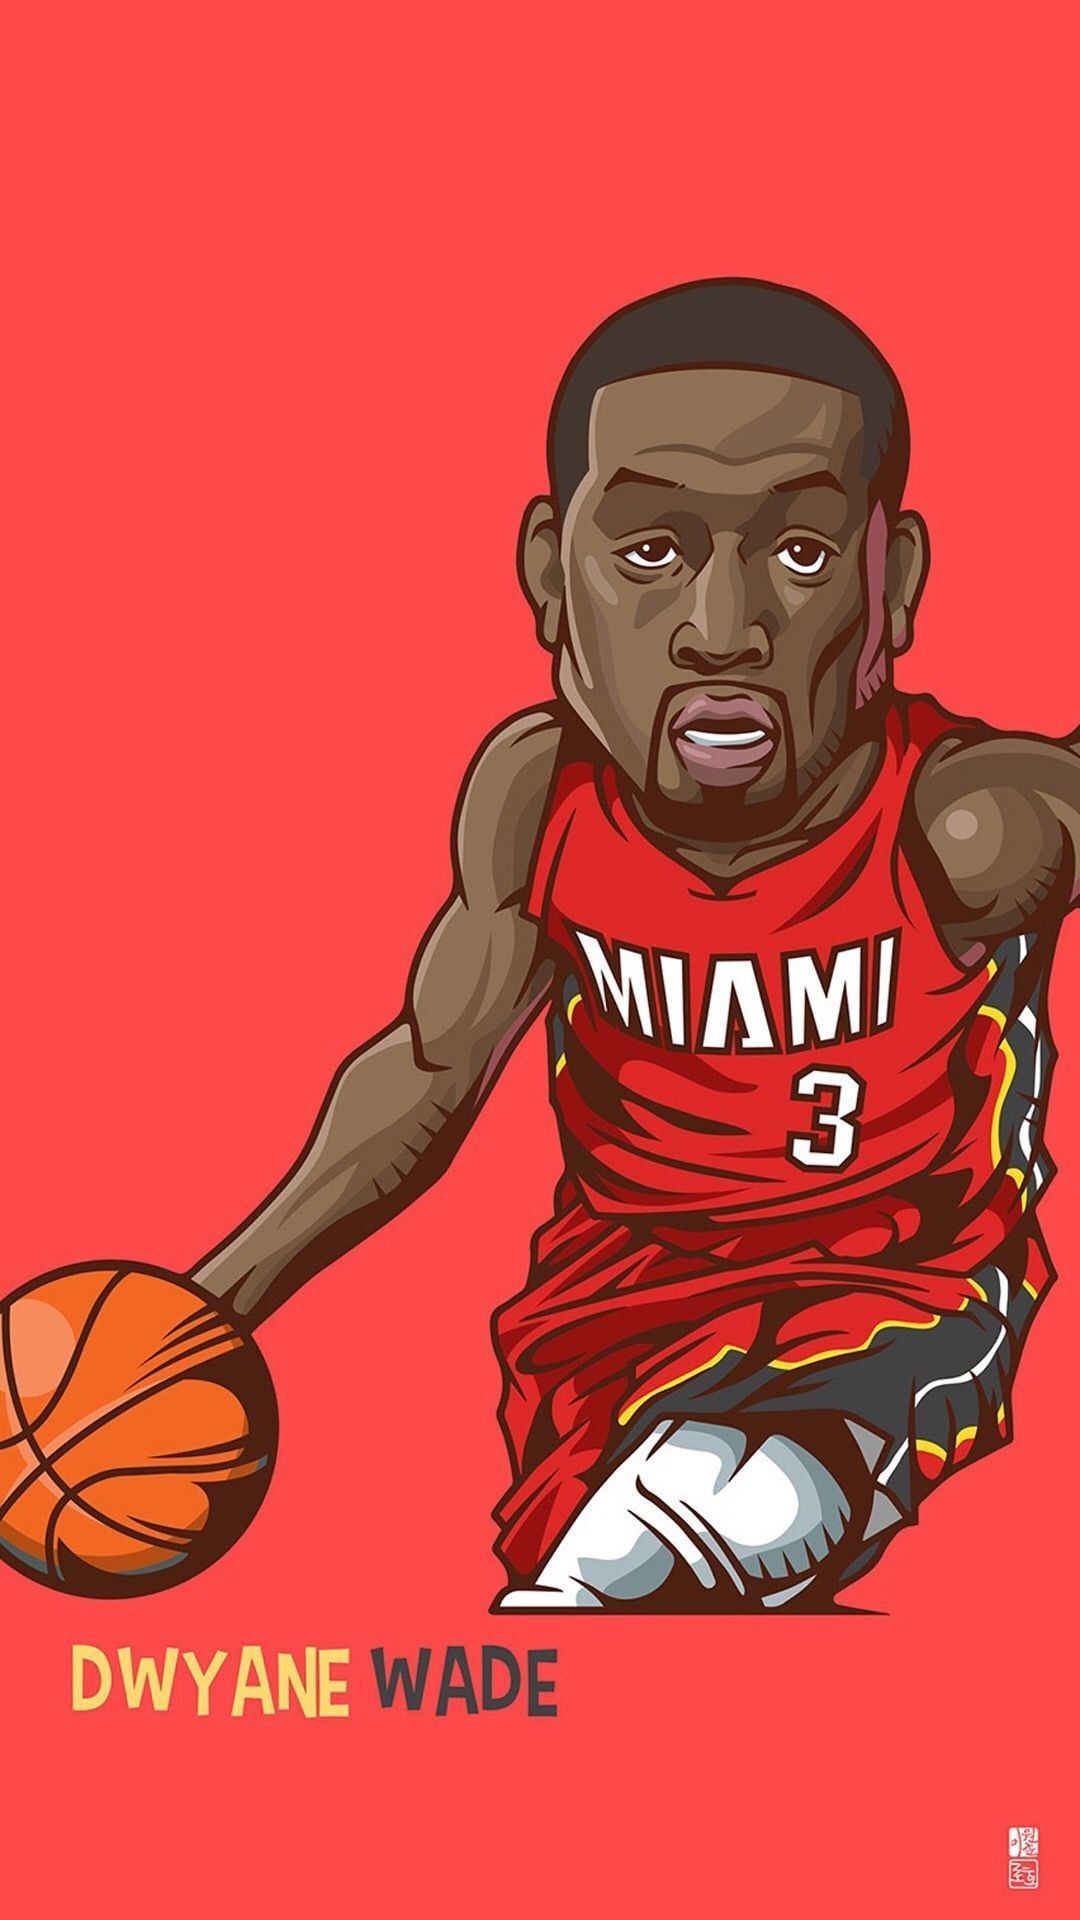 Art of the Day: NBA Cartoon Faces by GameGuyz 